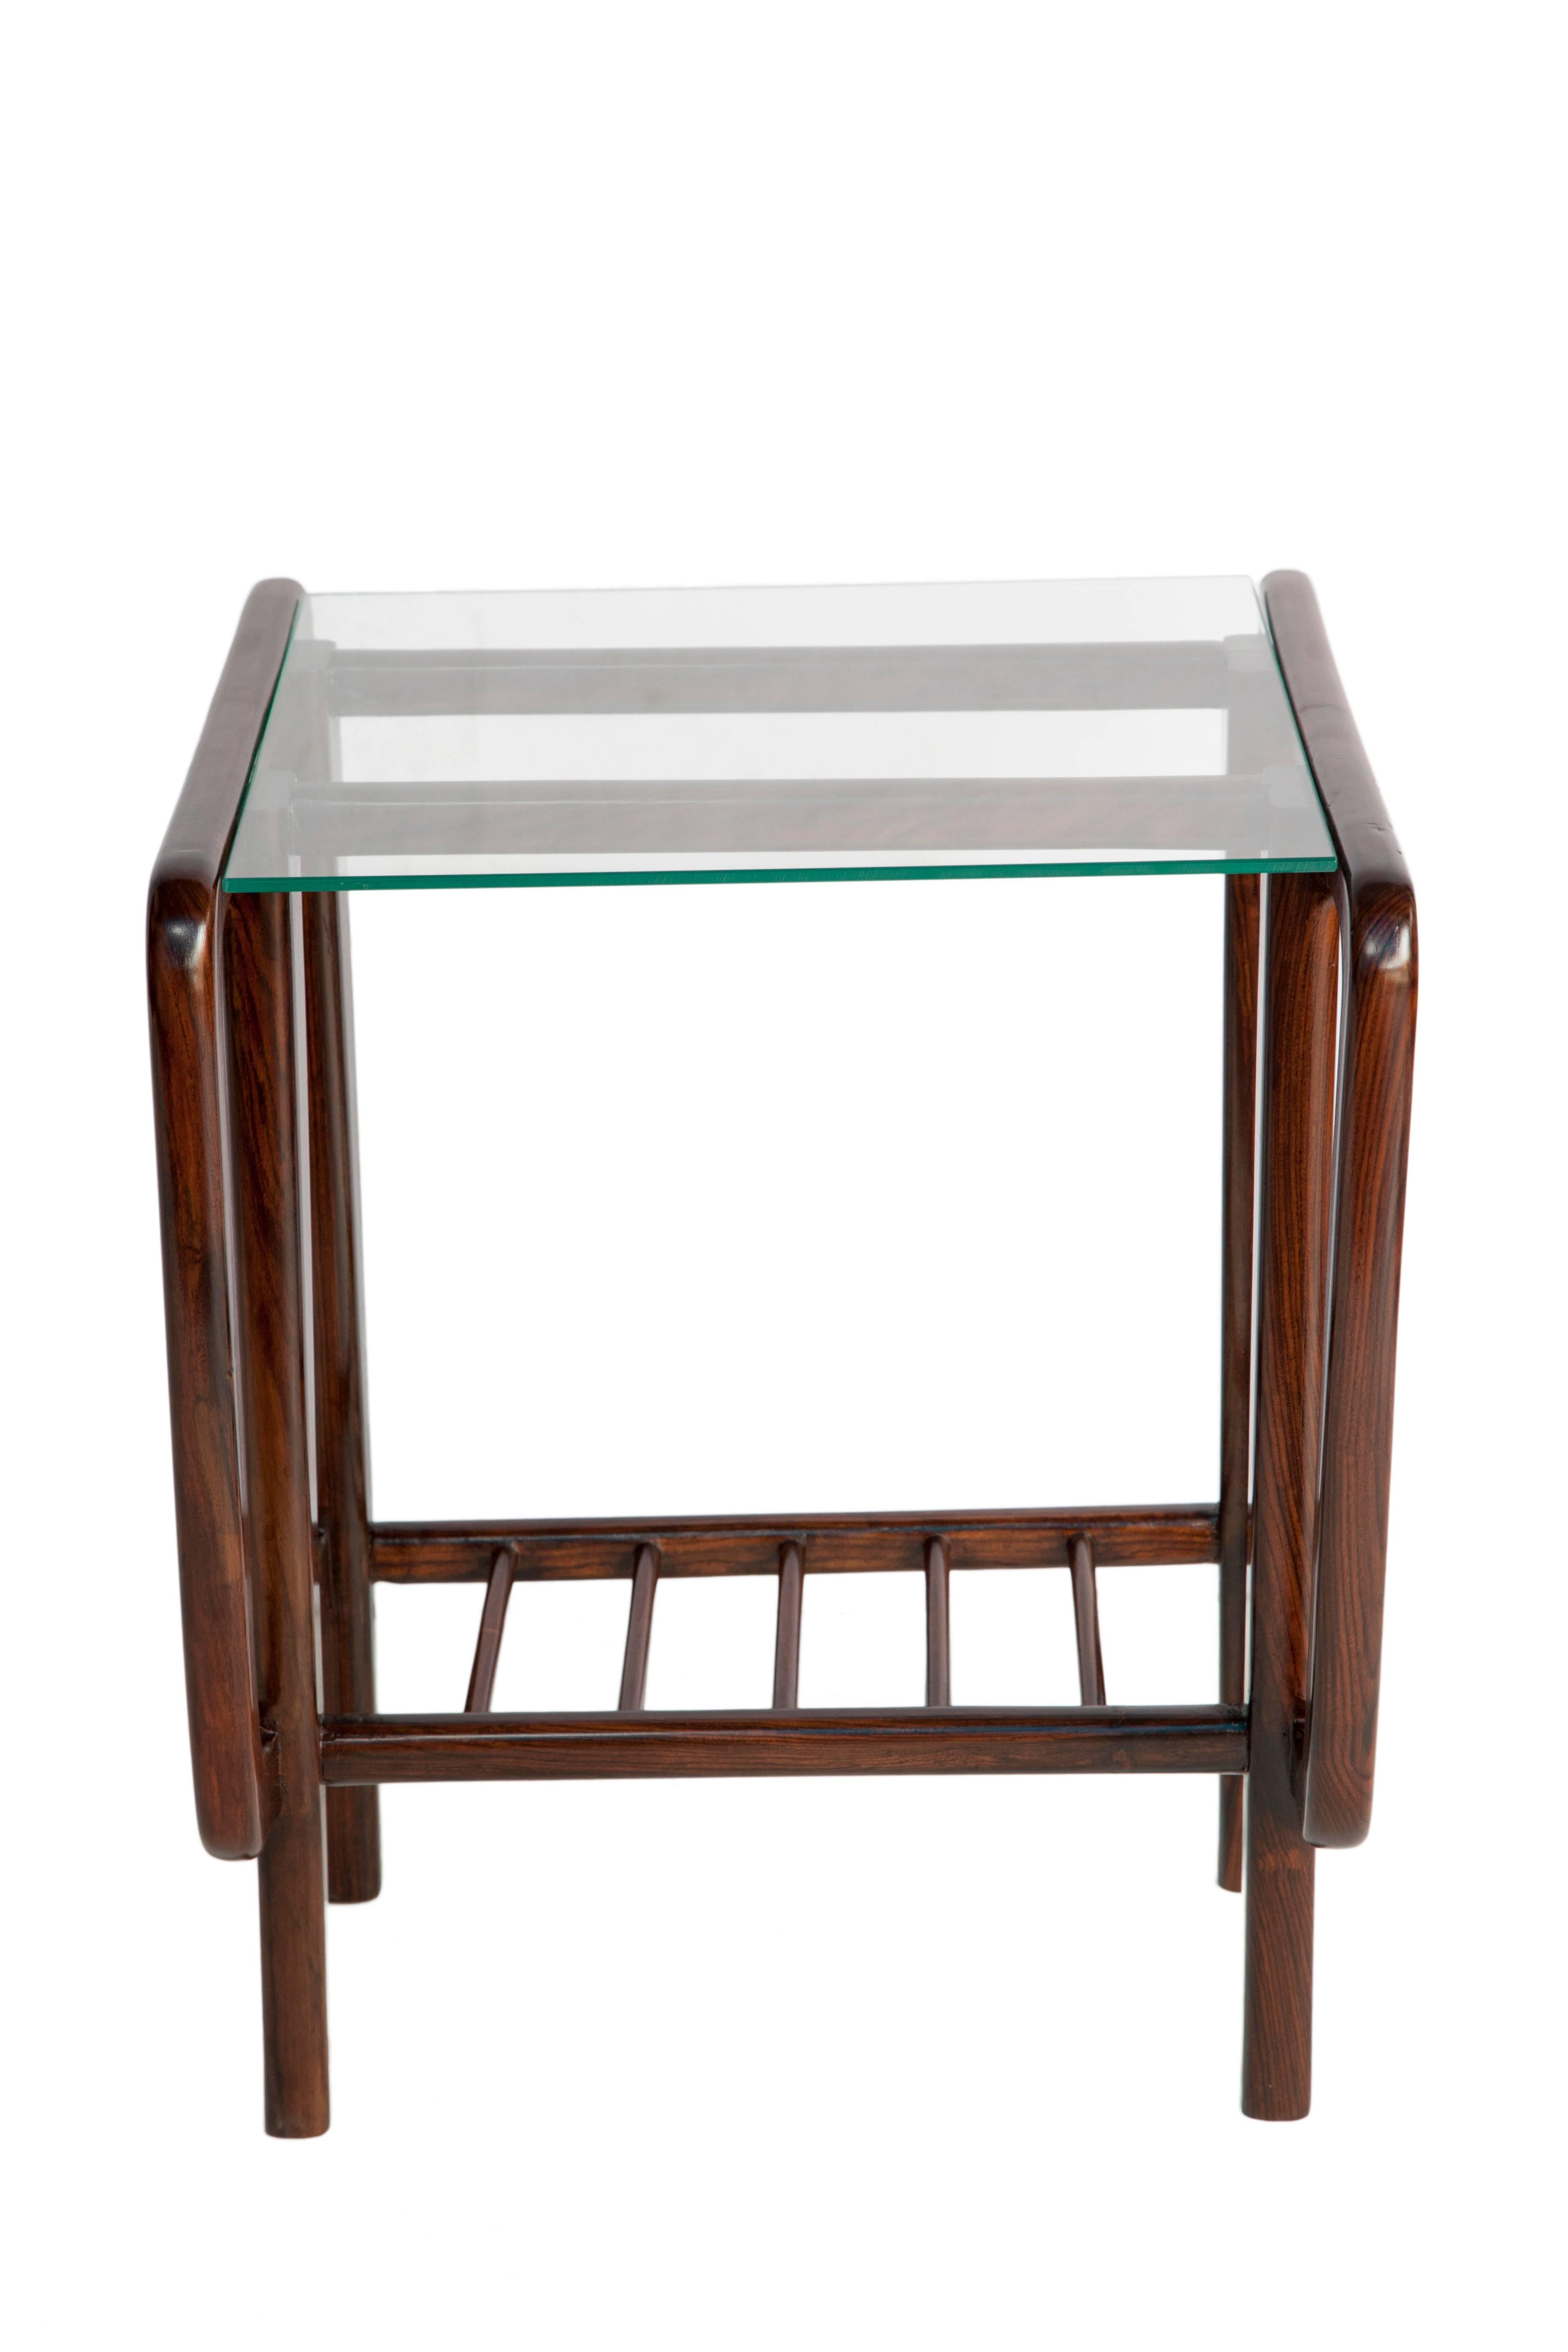 Glass Giuseppe Scapinelli Brazilian Mid-Century Modern Side Tables in Jacaranda Wood